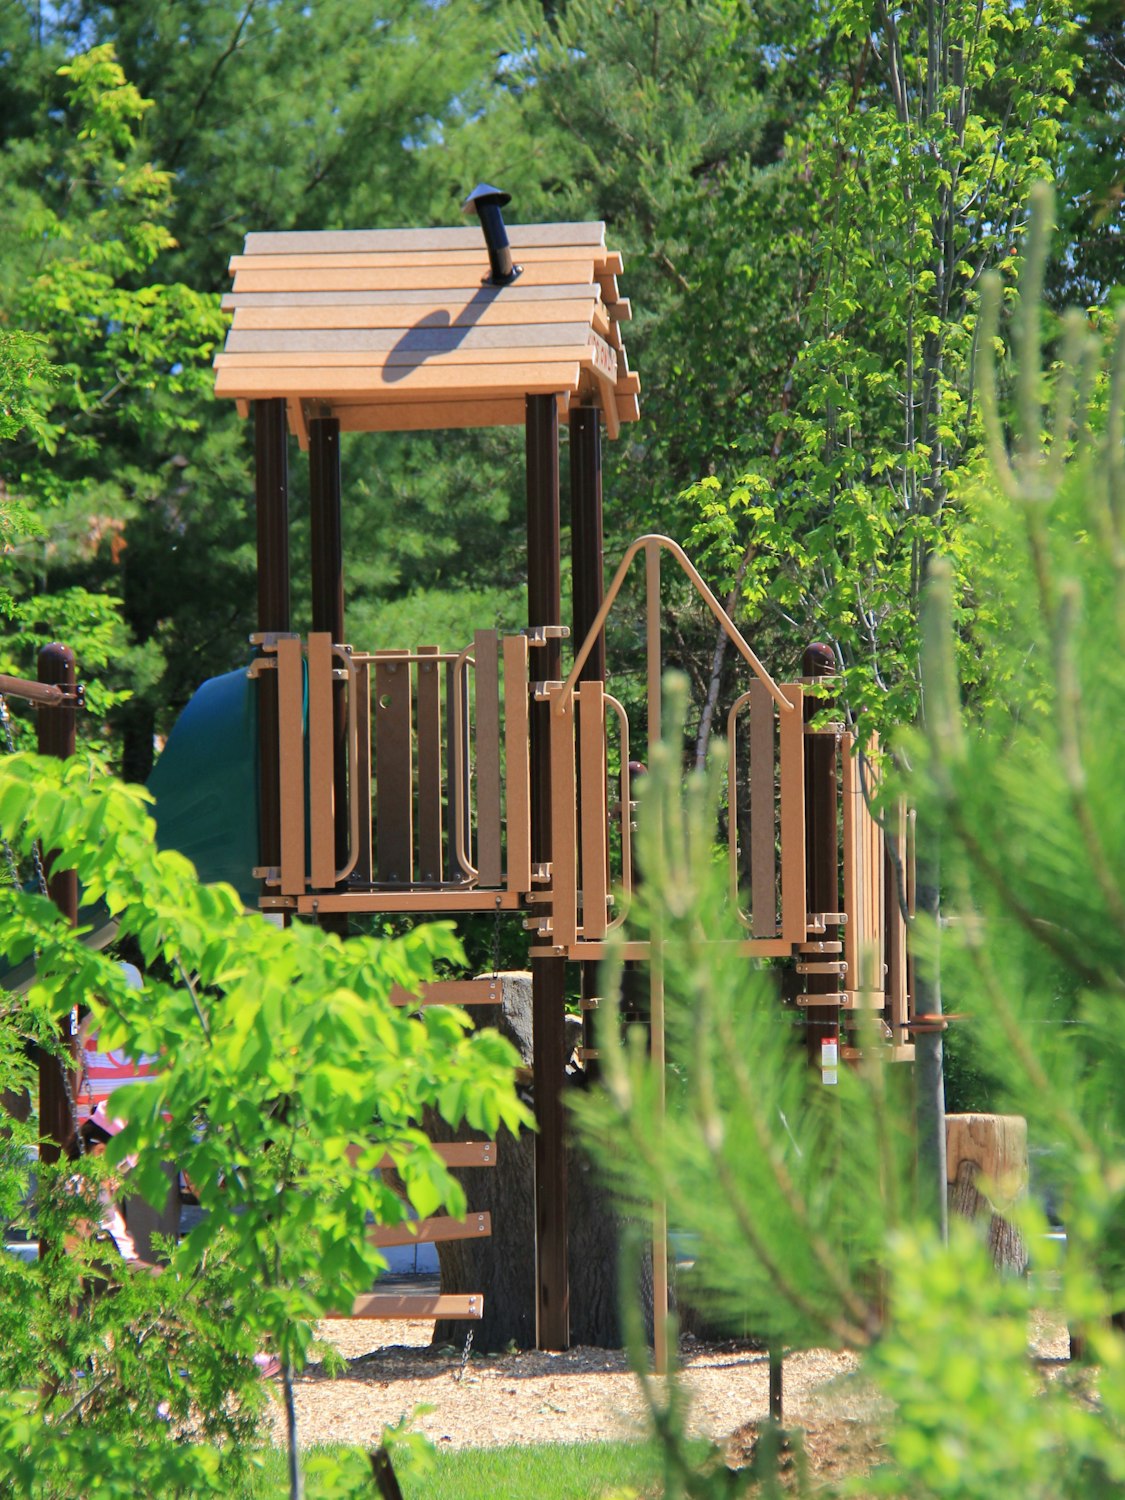 Image illustrating nature themed playground equipment design